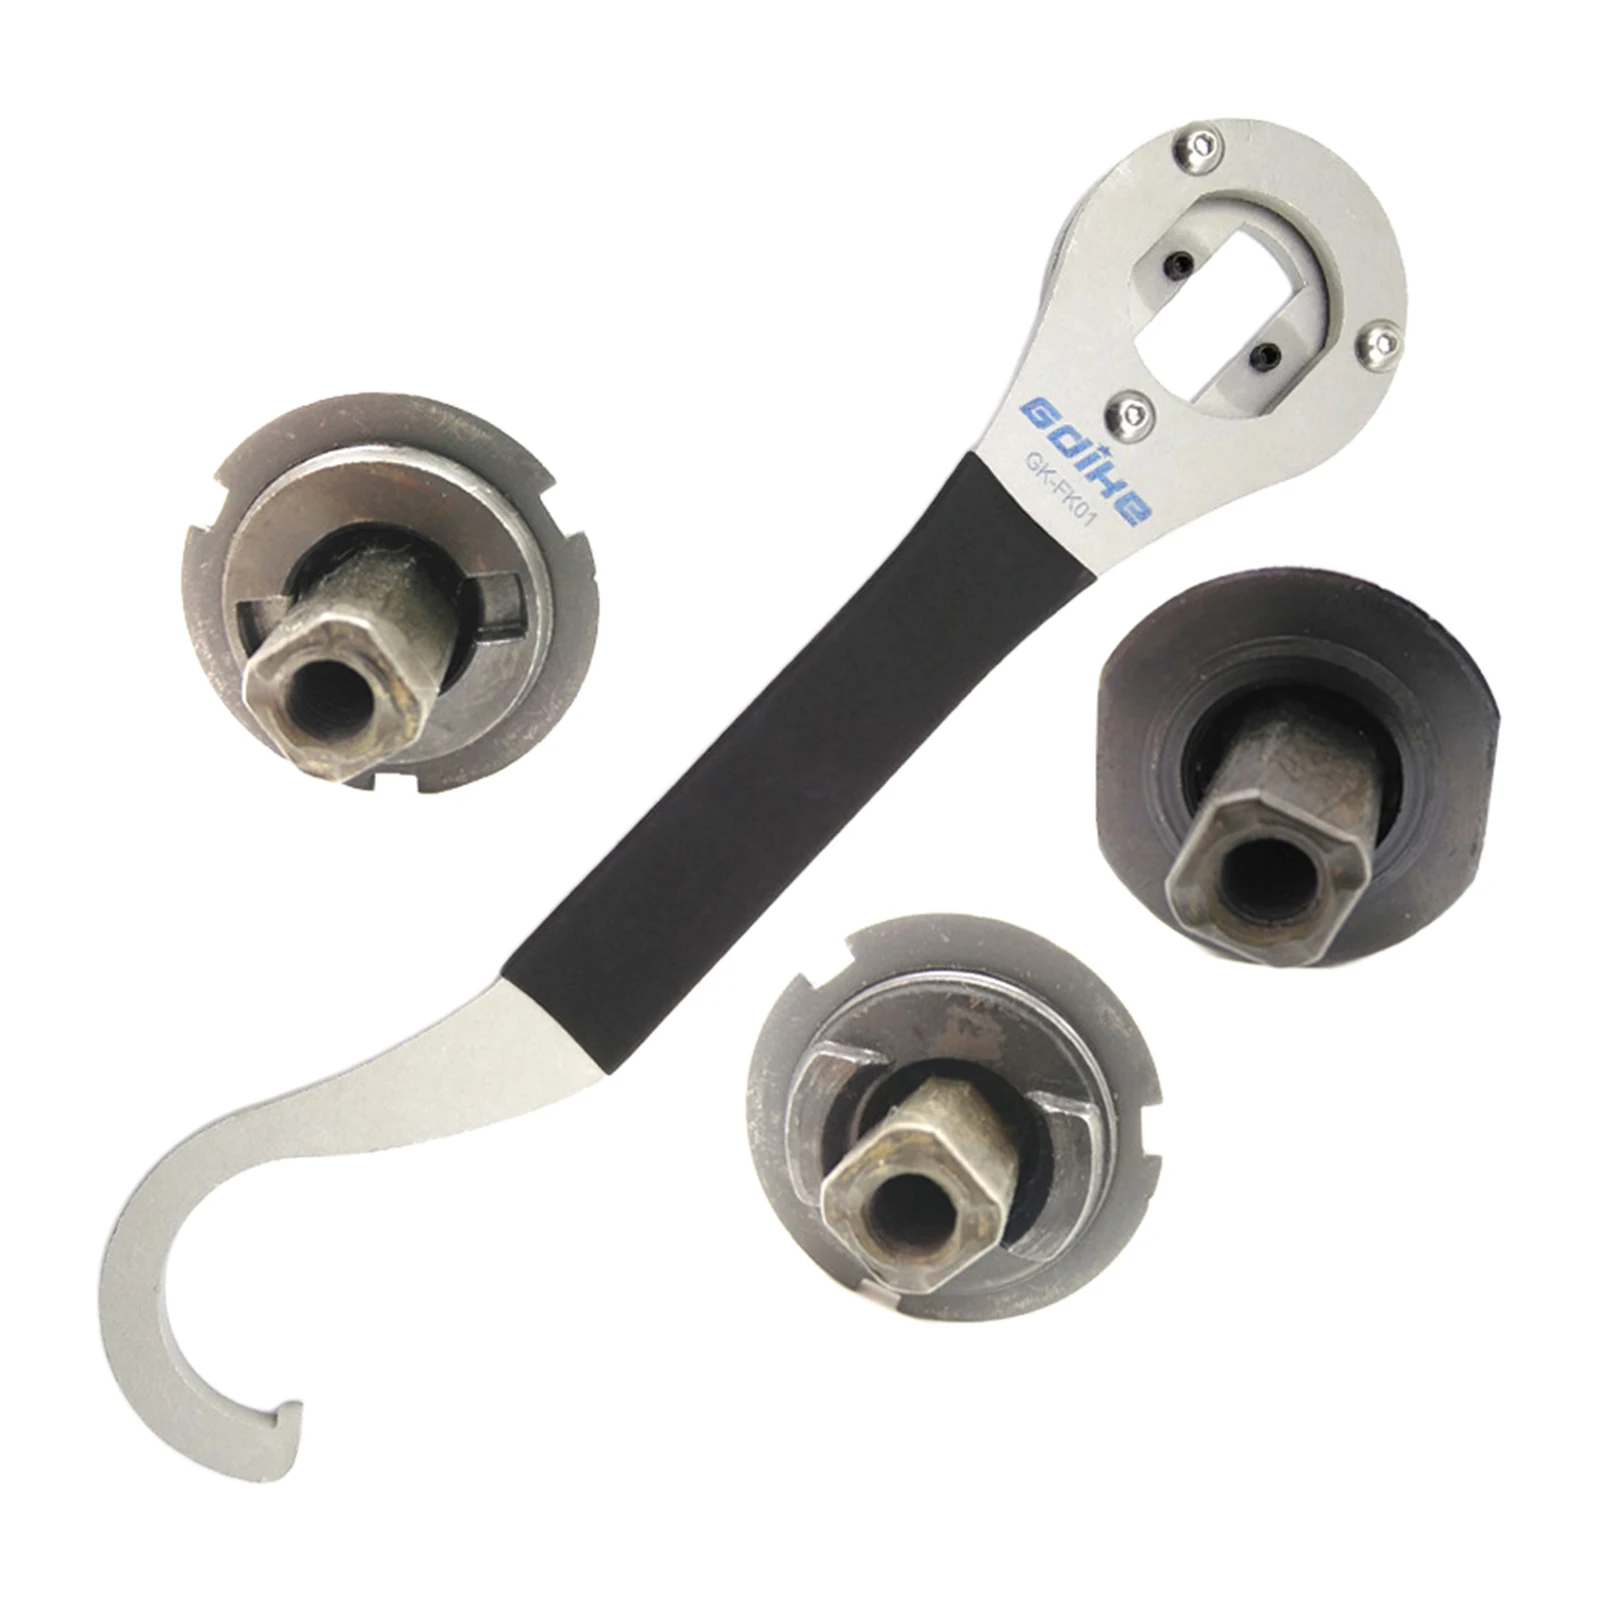 Bottom Bracket Remover BB Lock Ring Wrench MTB Road Bike Repair Maintenance Bike Headset Wrench Bicycle Repair Tool Kit